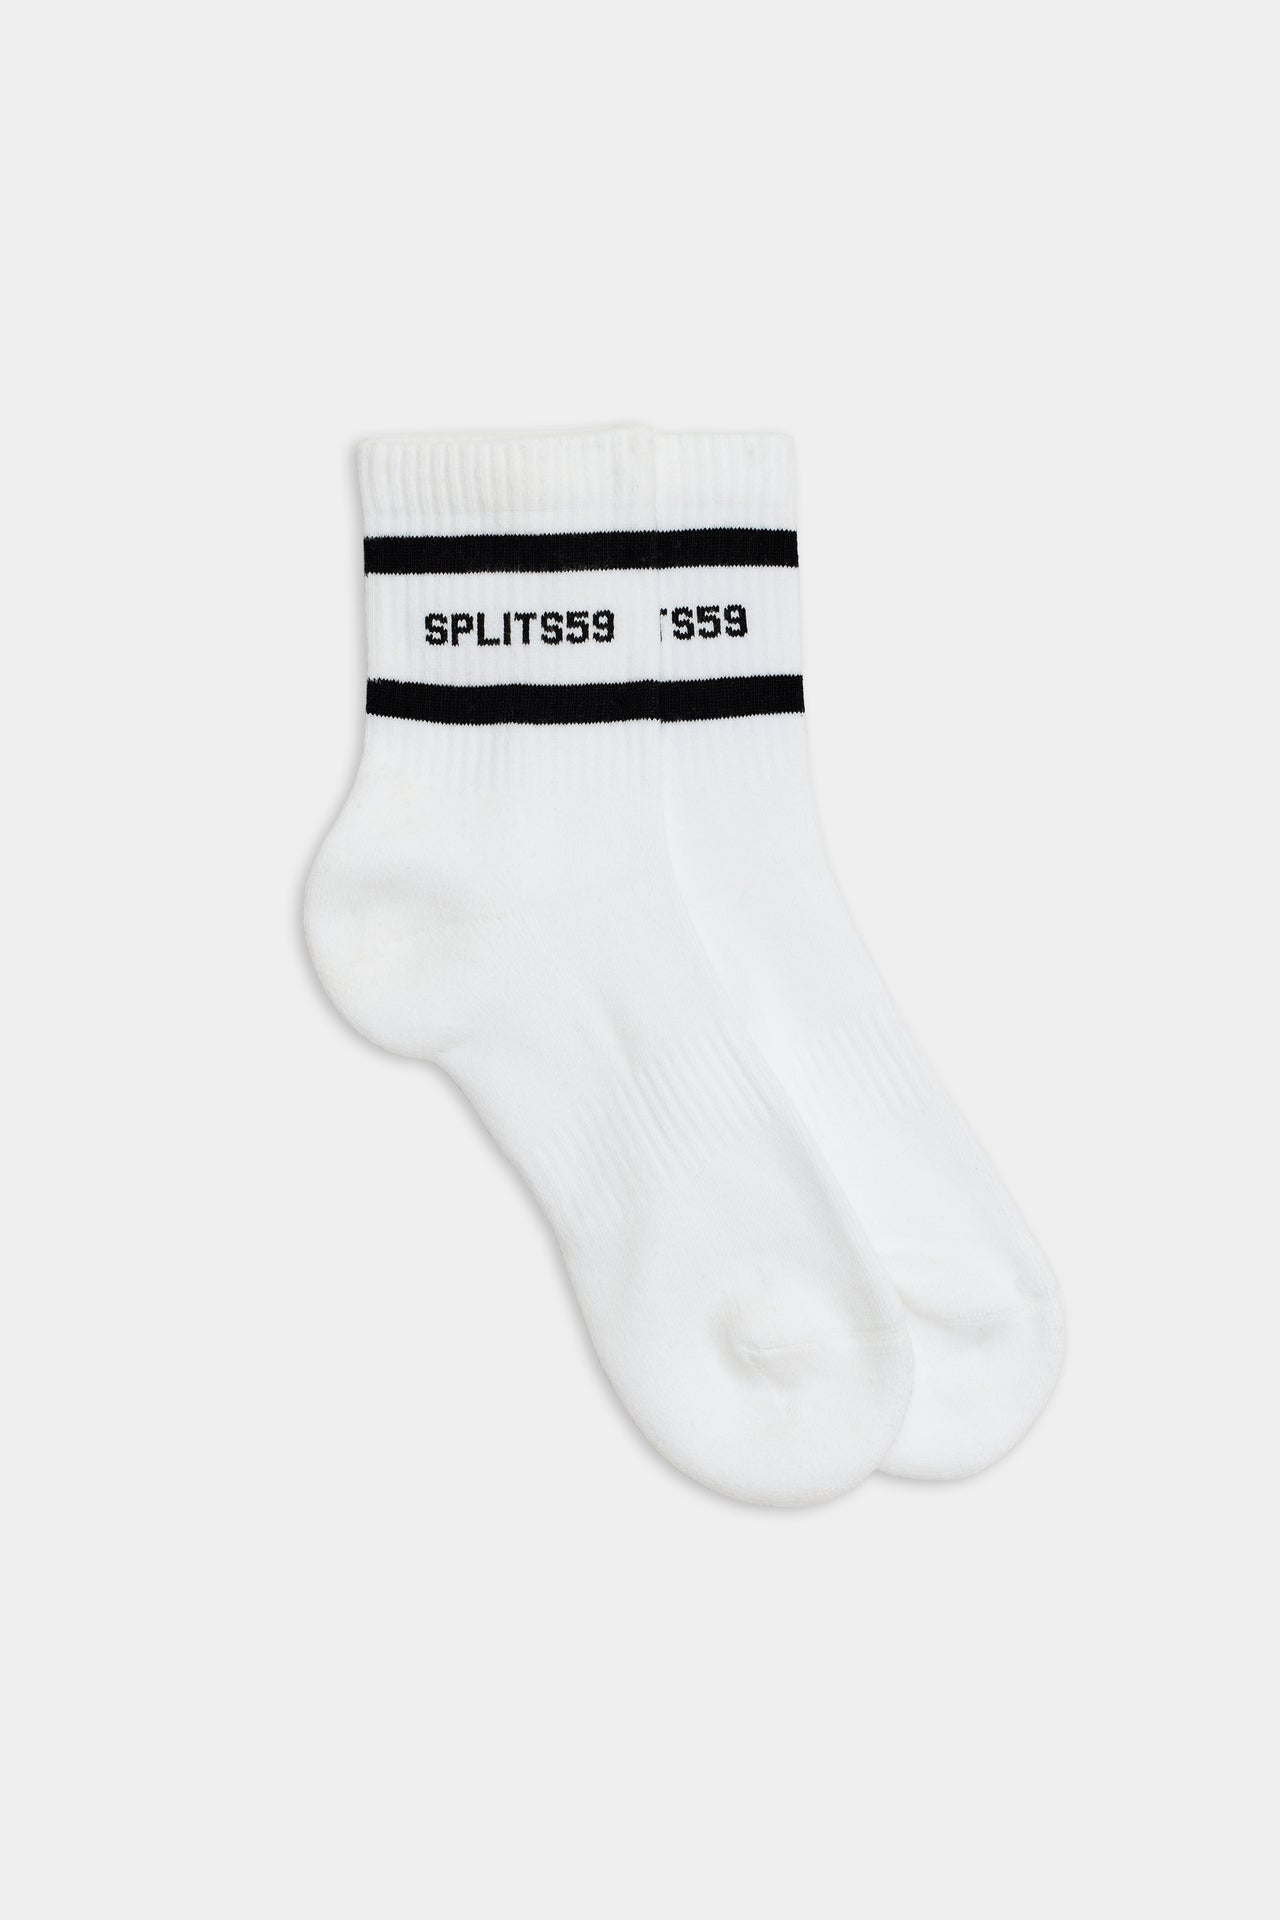 A pair of white Logo Stripe Quarter Socks by SPLITS59 with black branding on the cuffs.